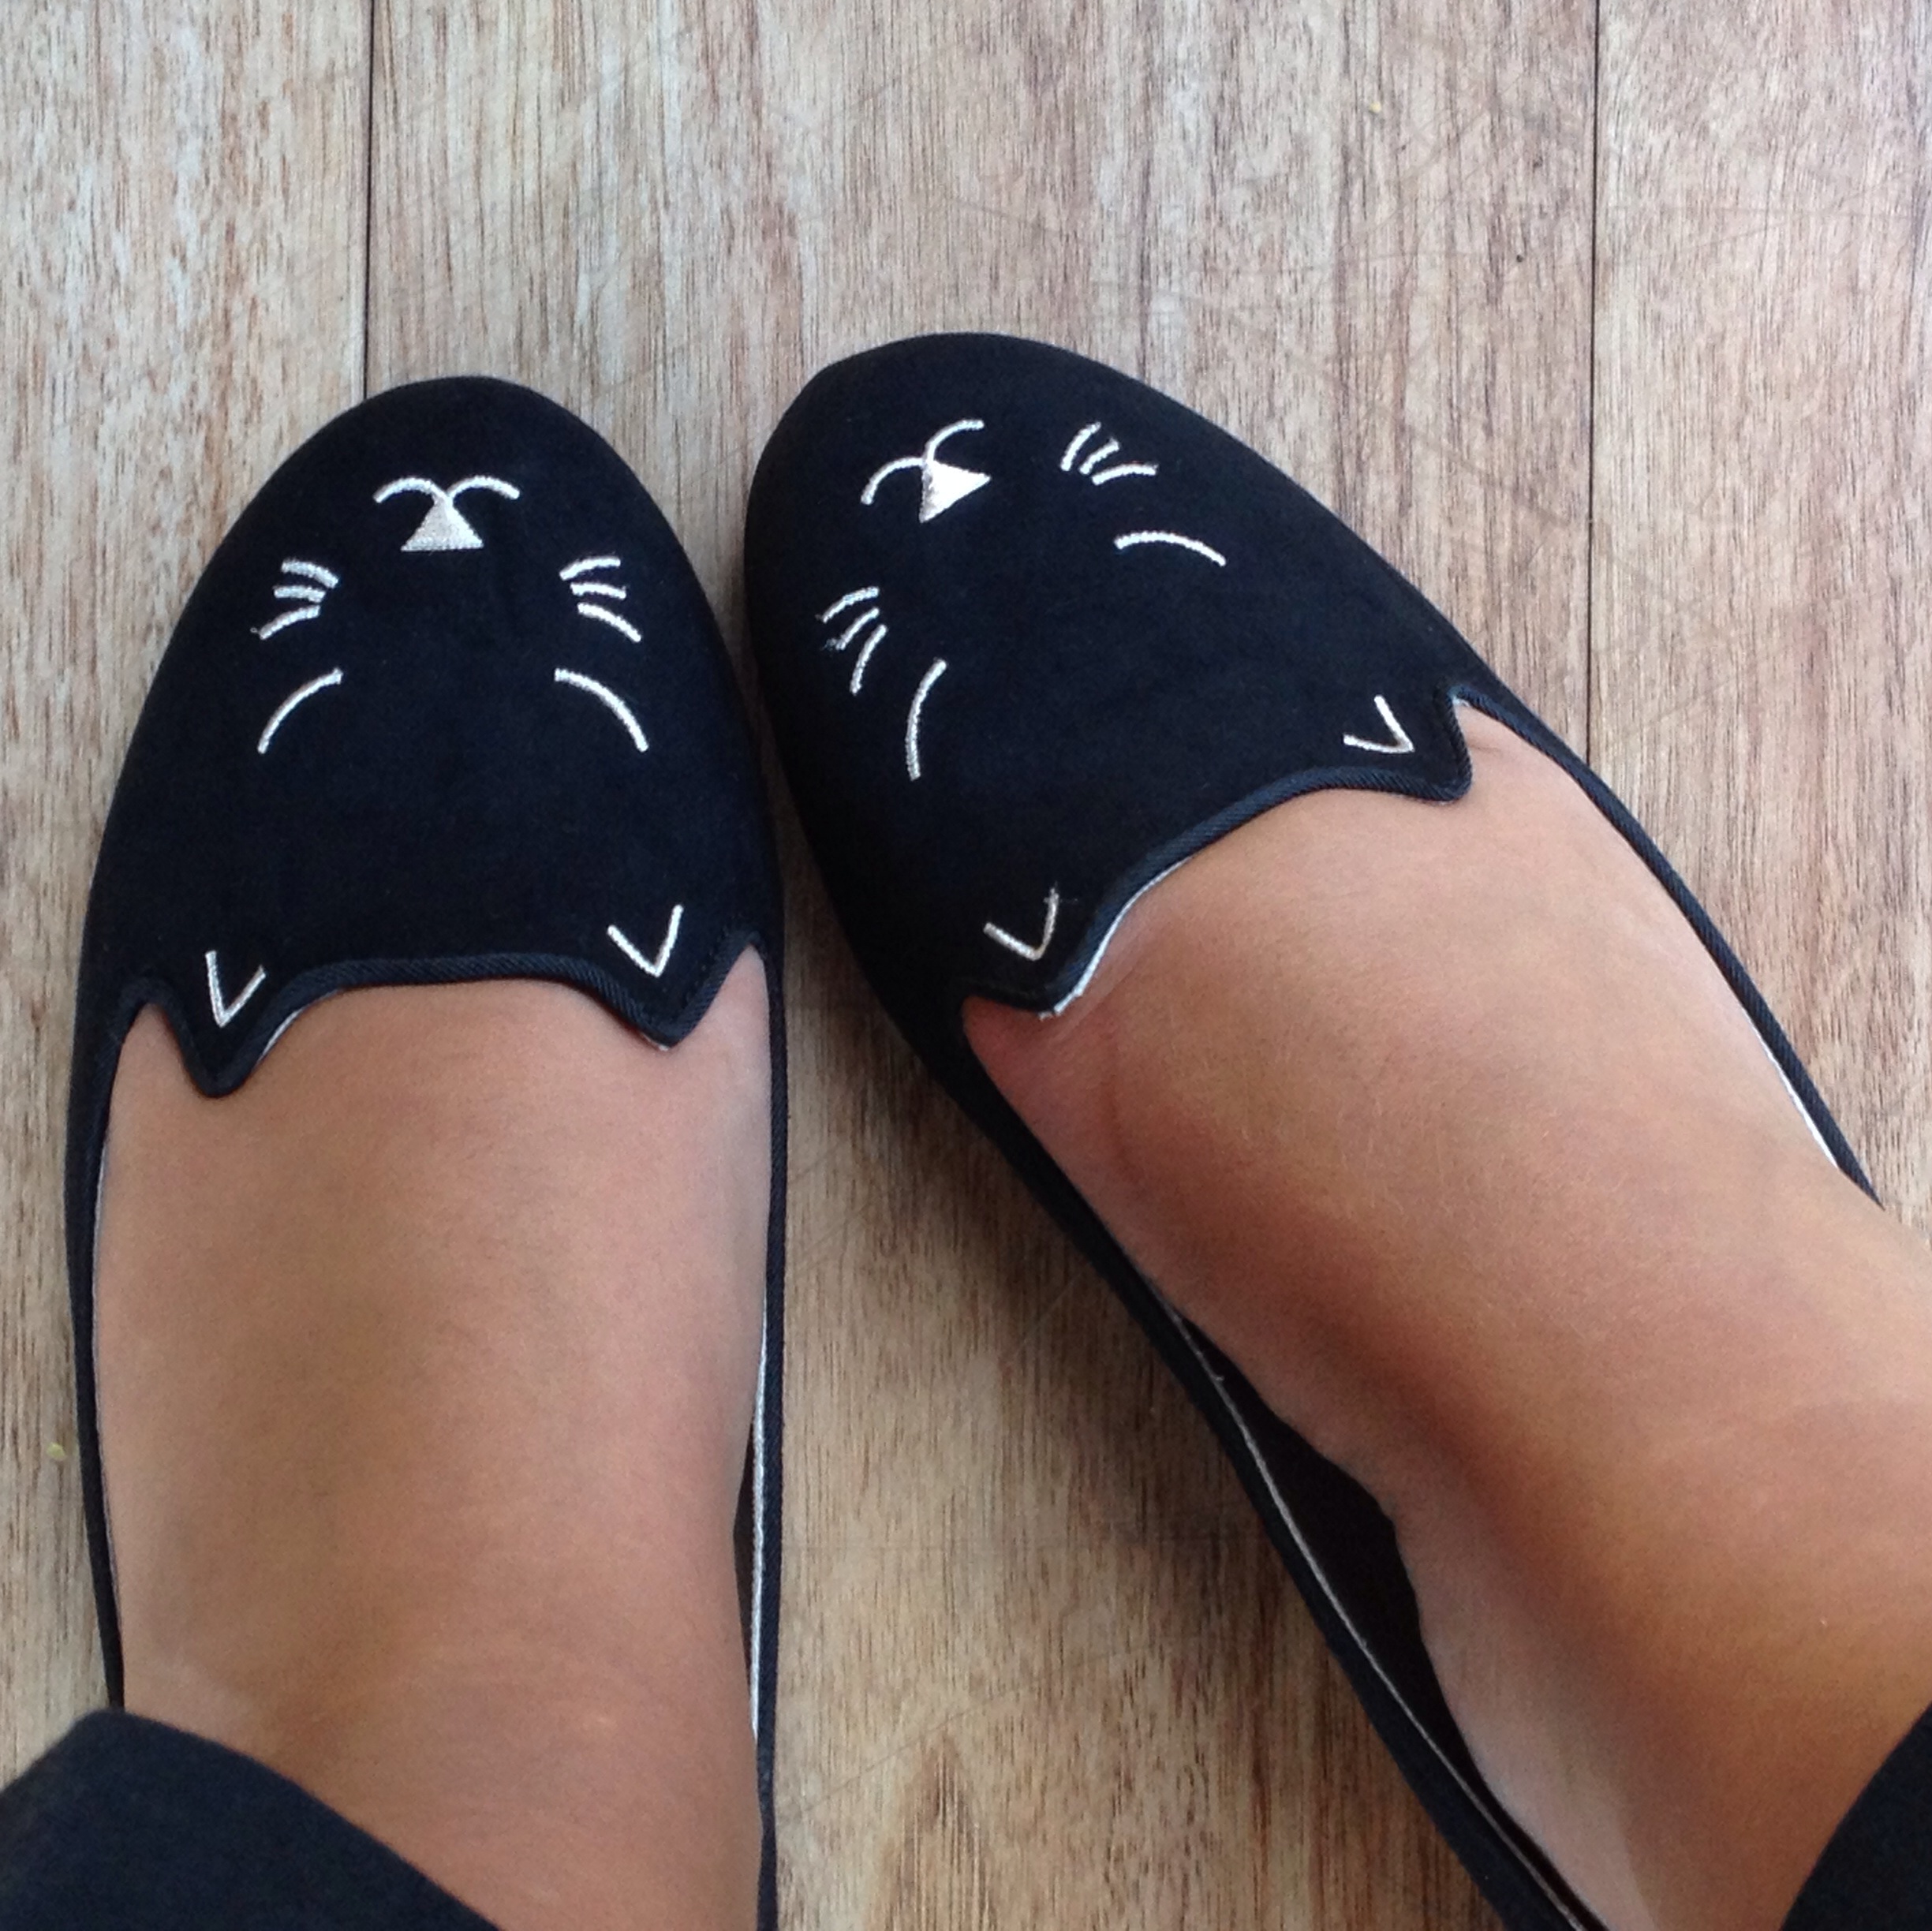 Zara cat shoes Charlotte Olympia style flats